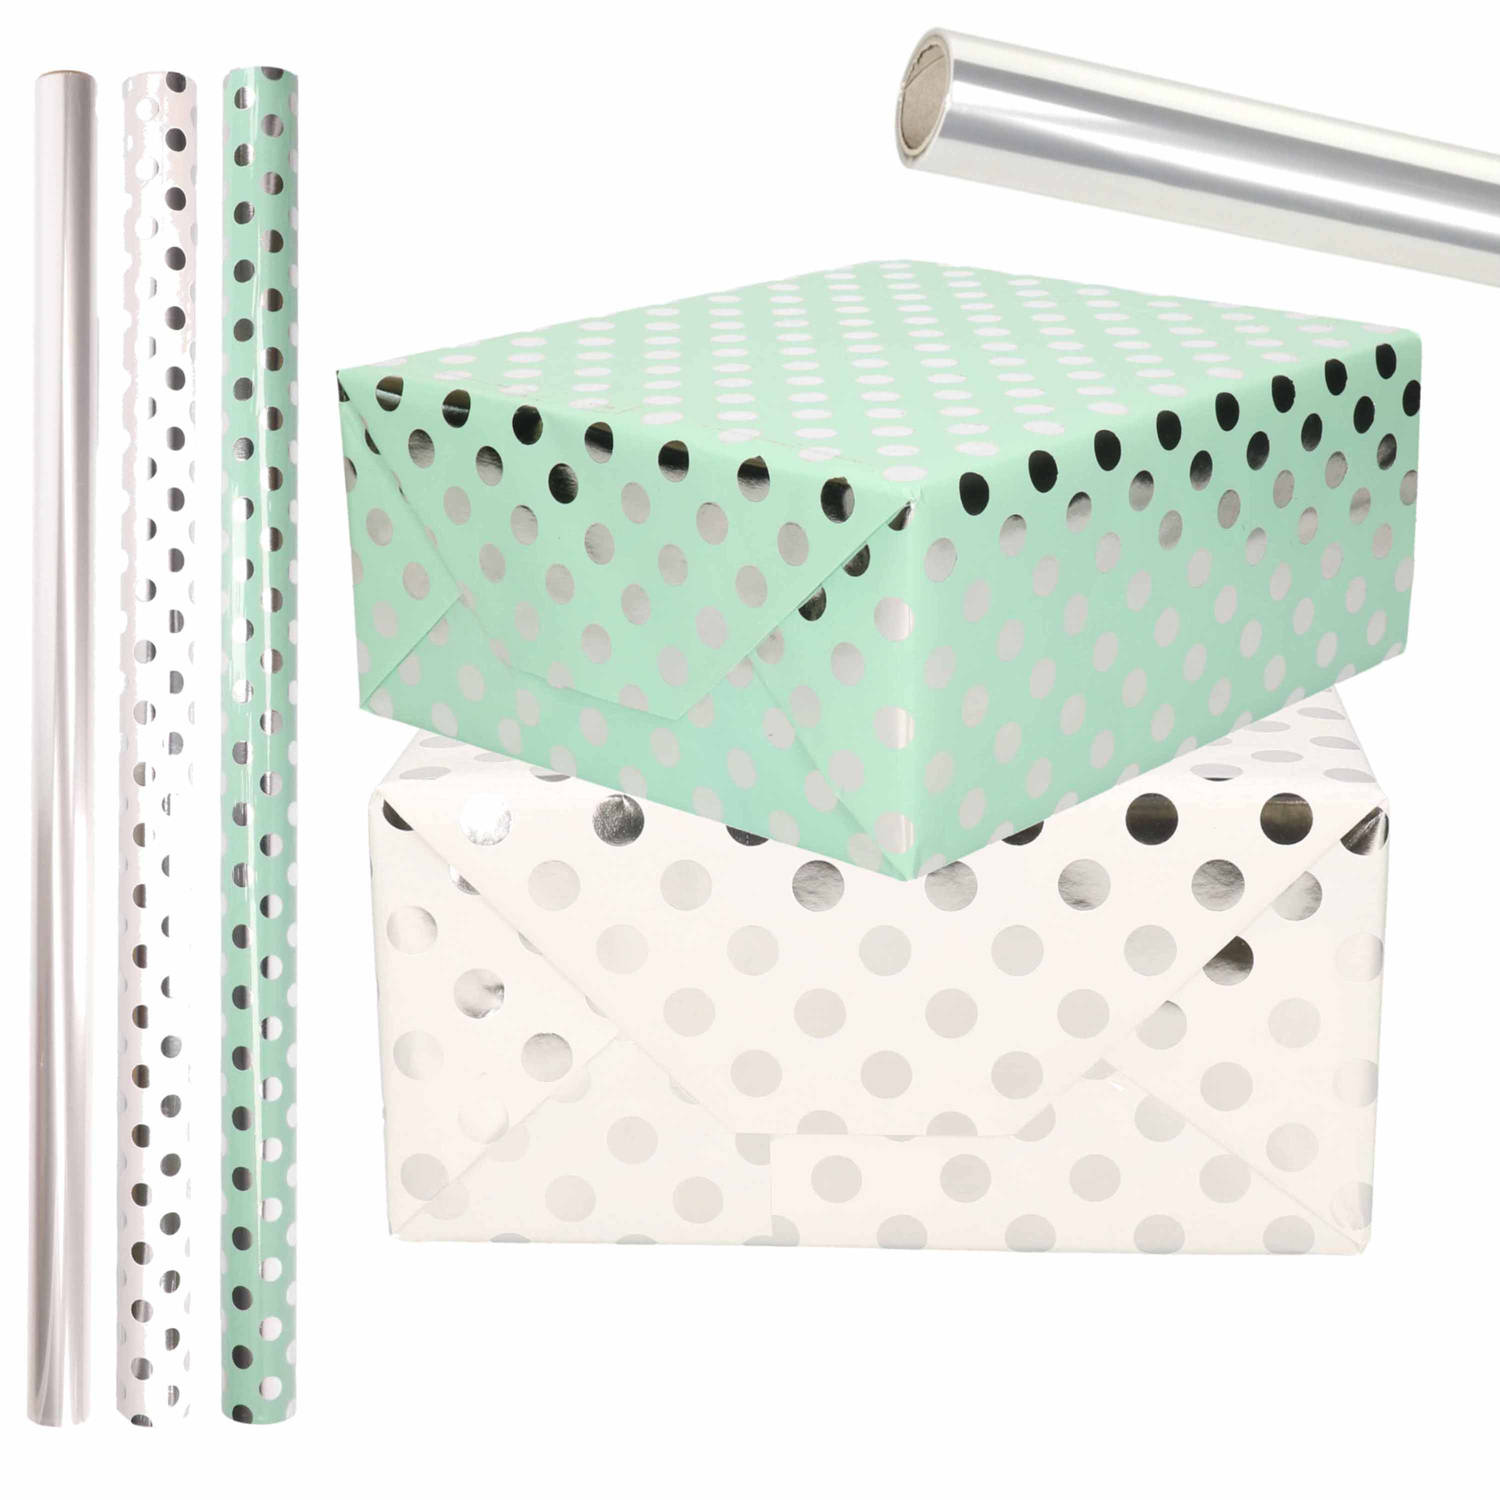 6x Rollen transparante-folie luxe inpakpapier zilveren stippen pakket mintgroen-wit 200 x 70 cm Cade